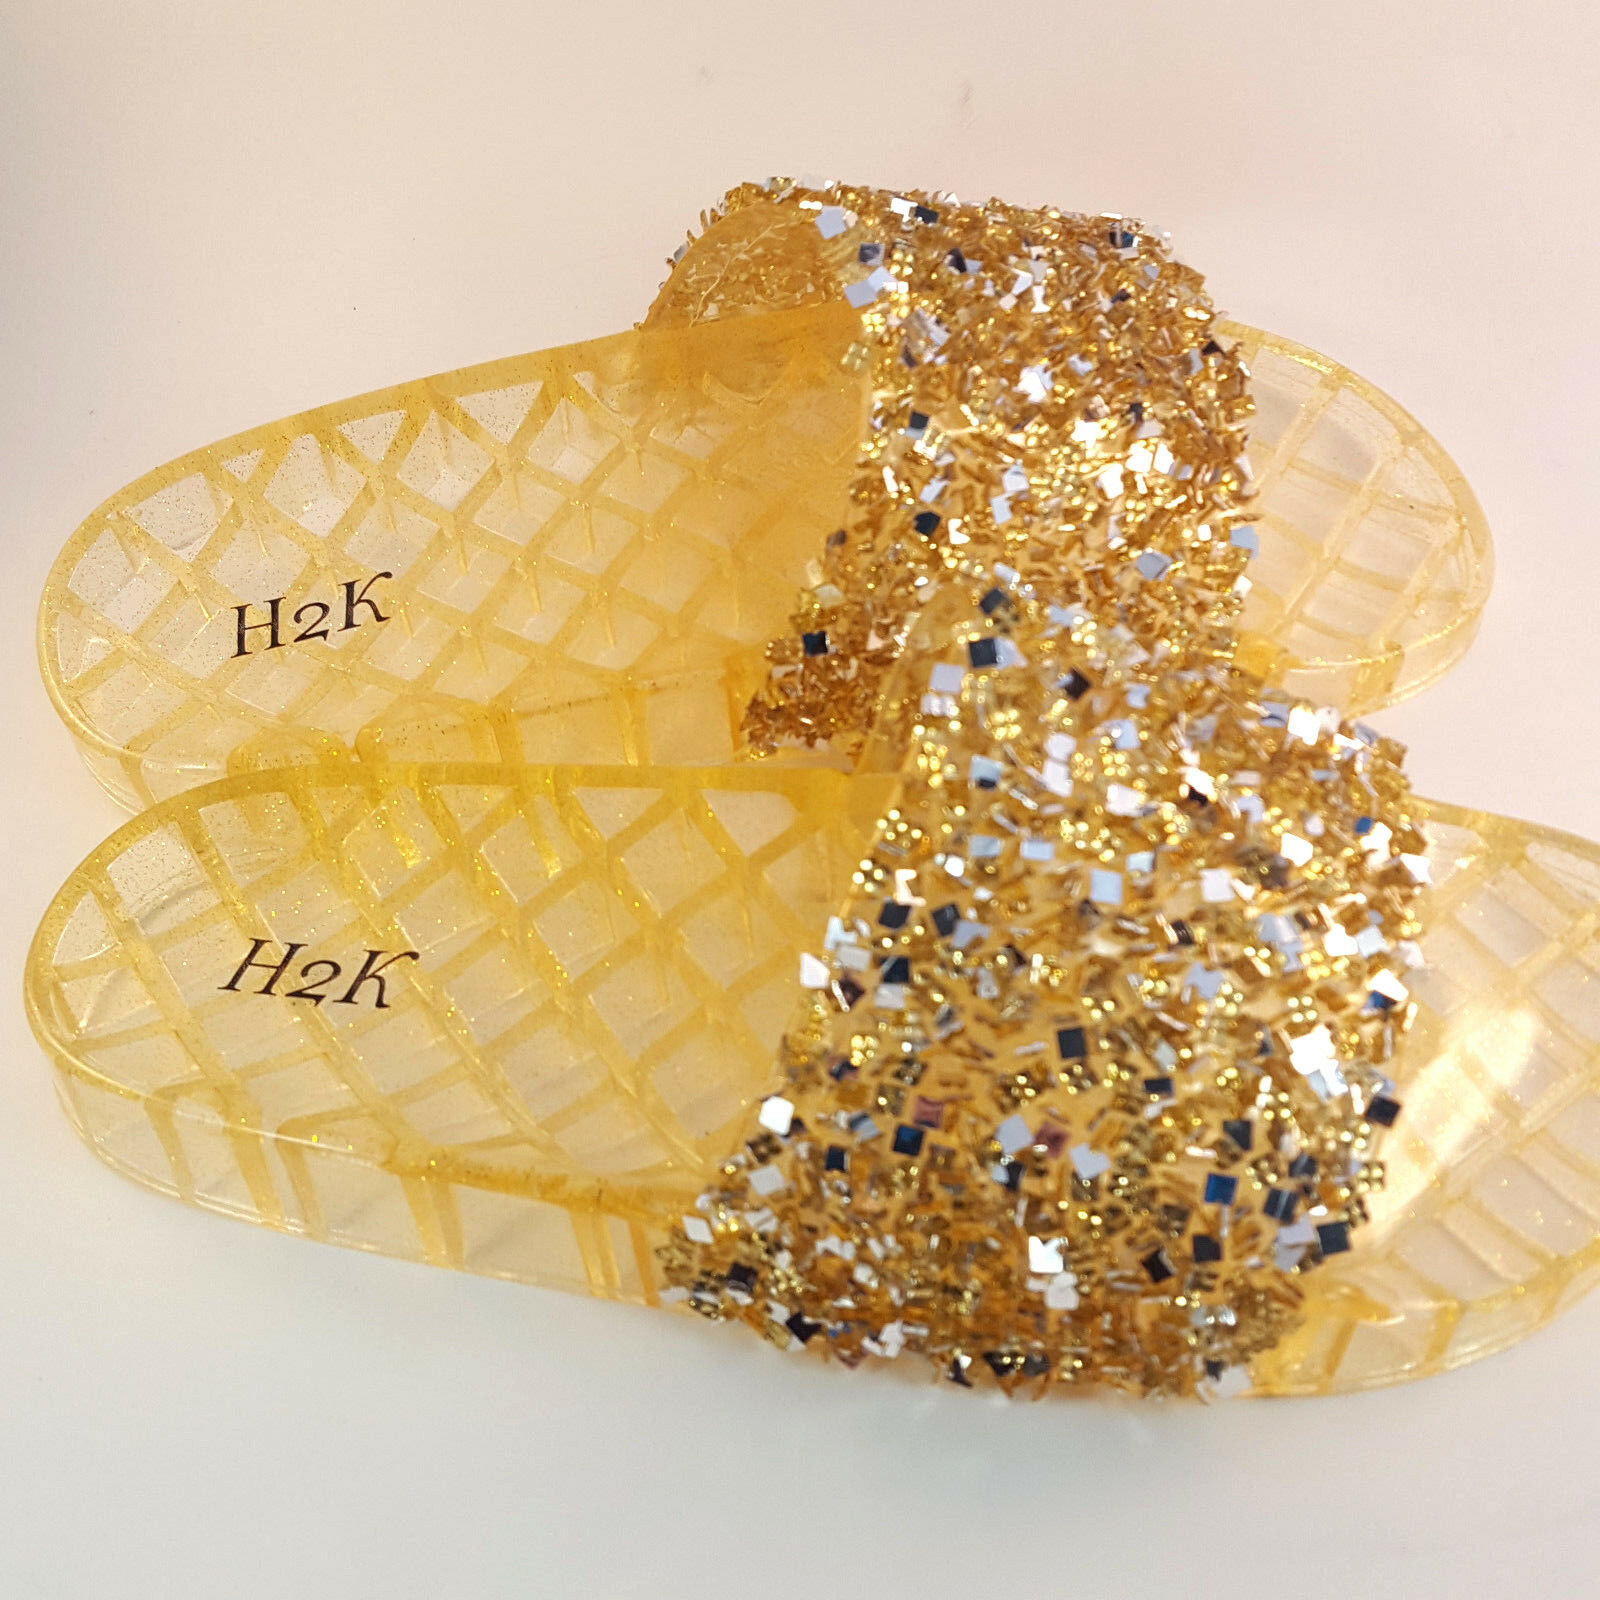 Primary image for H2K CANDY Gold Color Glitter Beads Fashion Slides Flip Flops Sandals Bling 